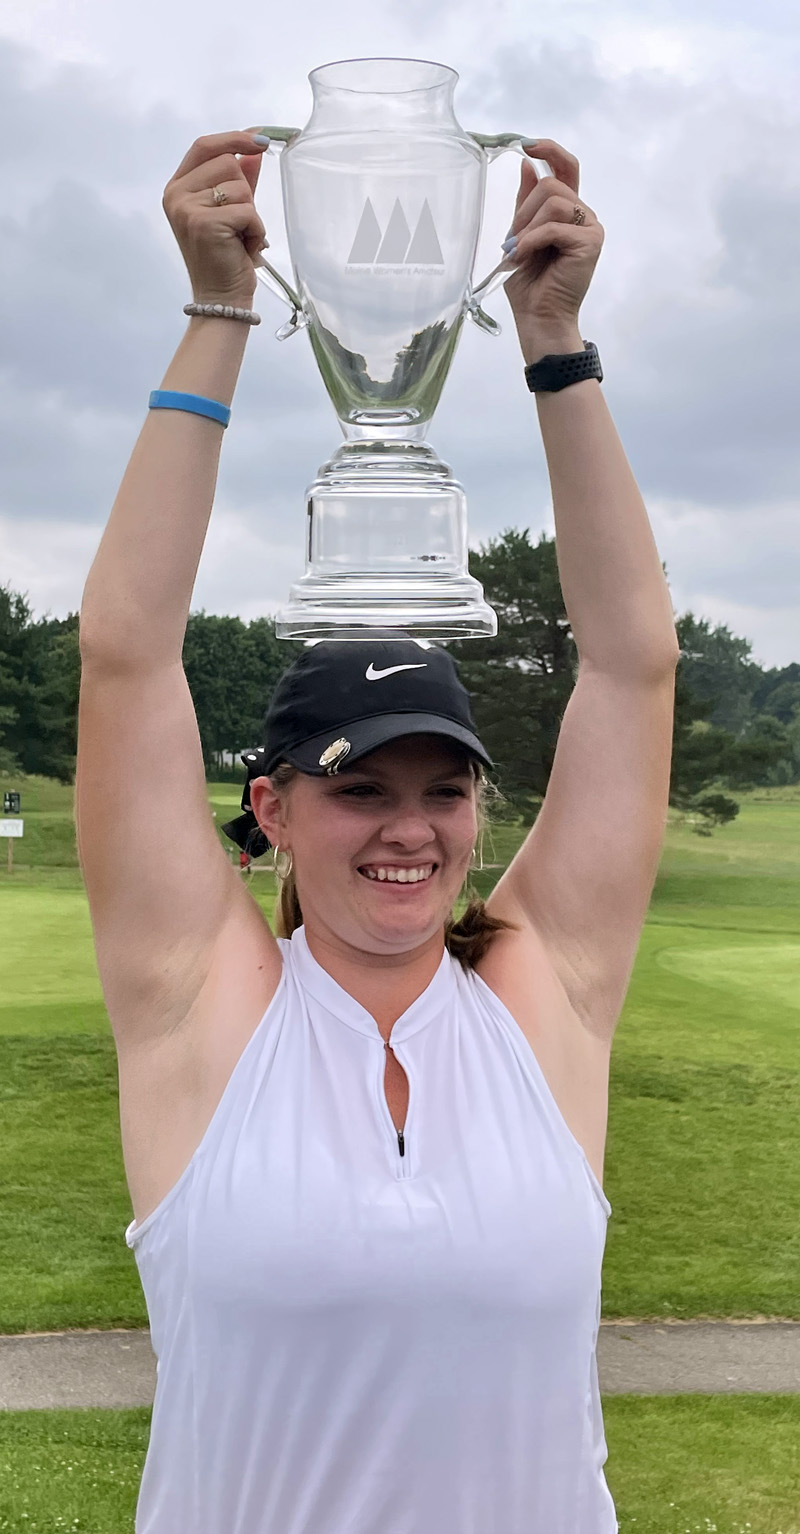 Bailey Plourde hoists her Maine Women's Amateur Golf Tournament's first place trophy over head in celebration. (Photo courtesy Lynne Plourde)